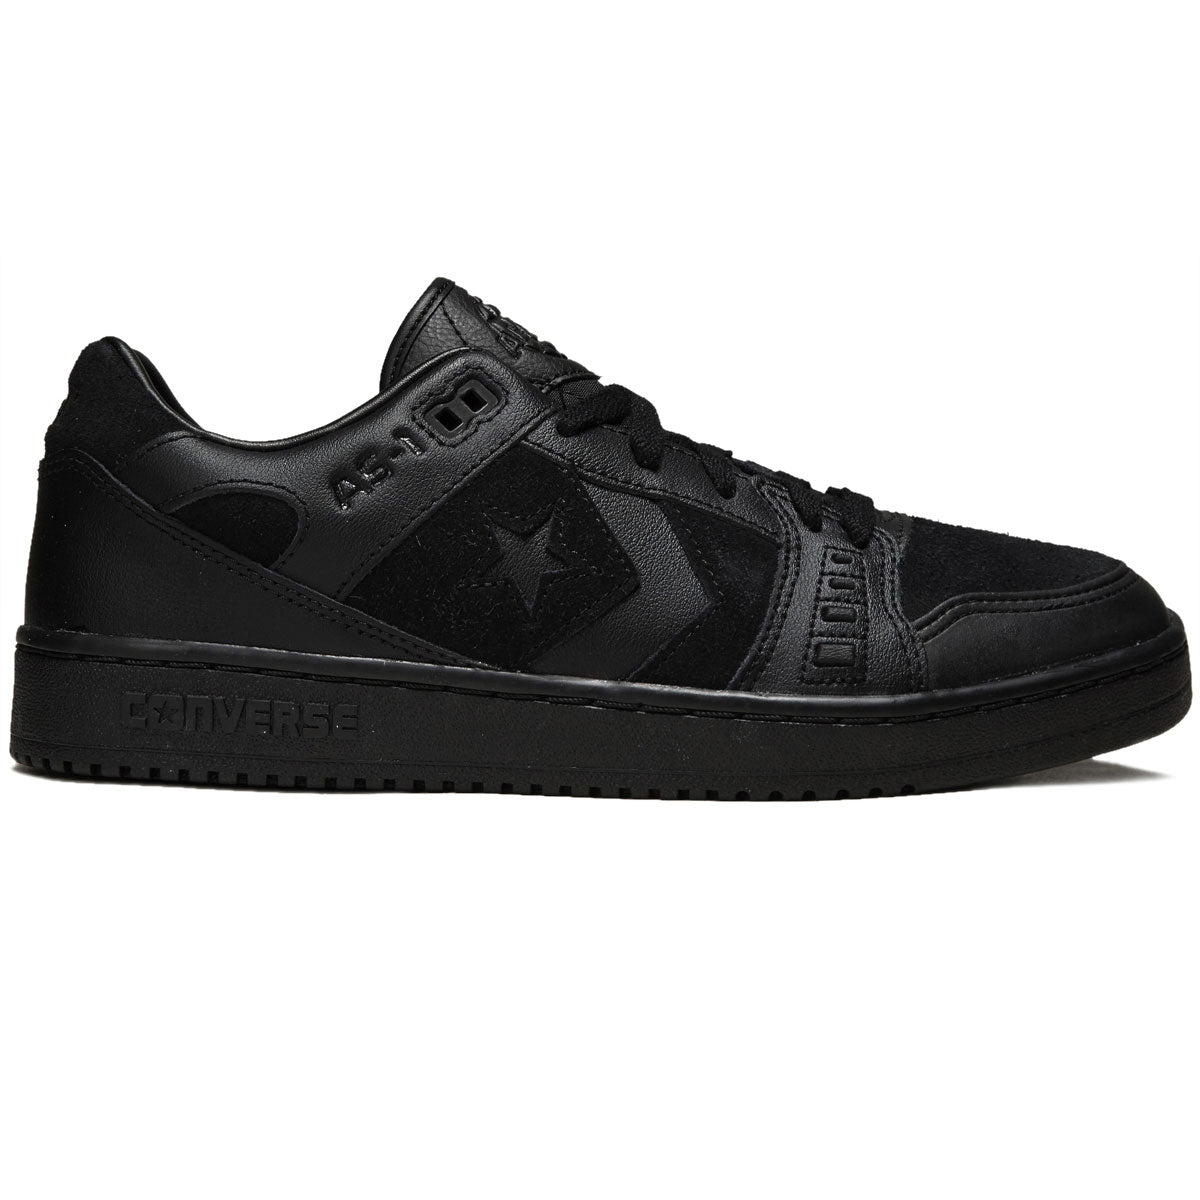 Converse AS-1 Pro Shoes - Black/Black/Black image 1